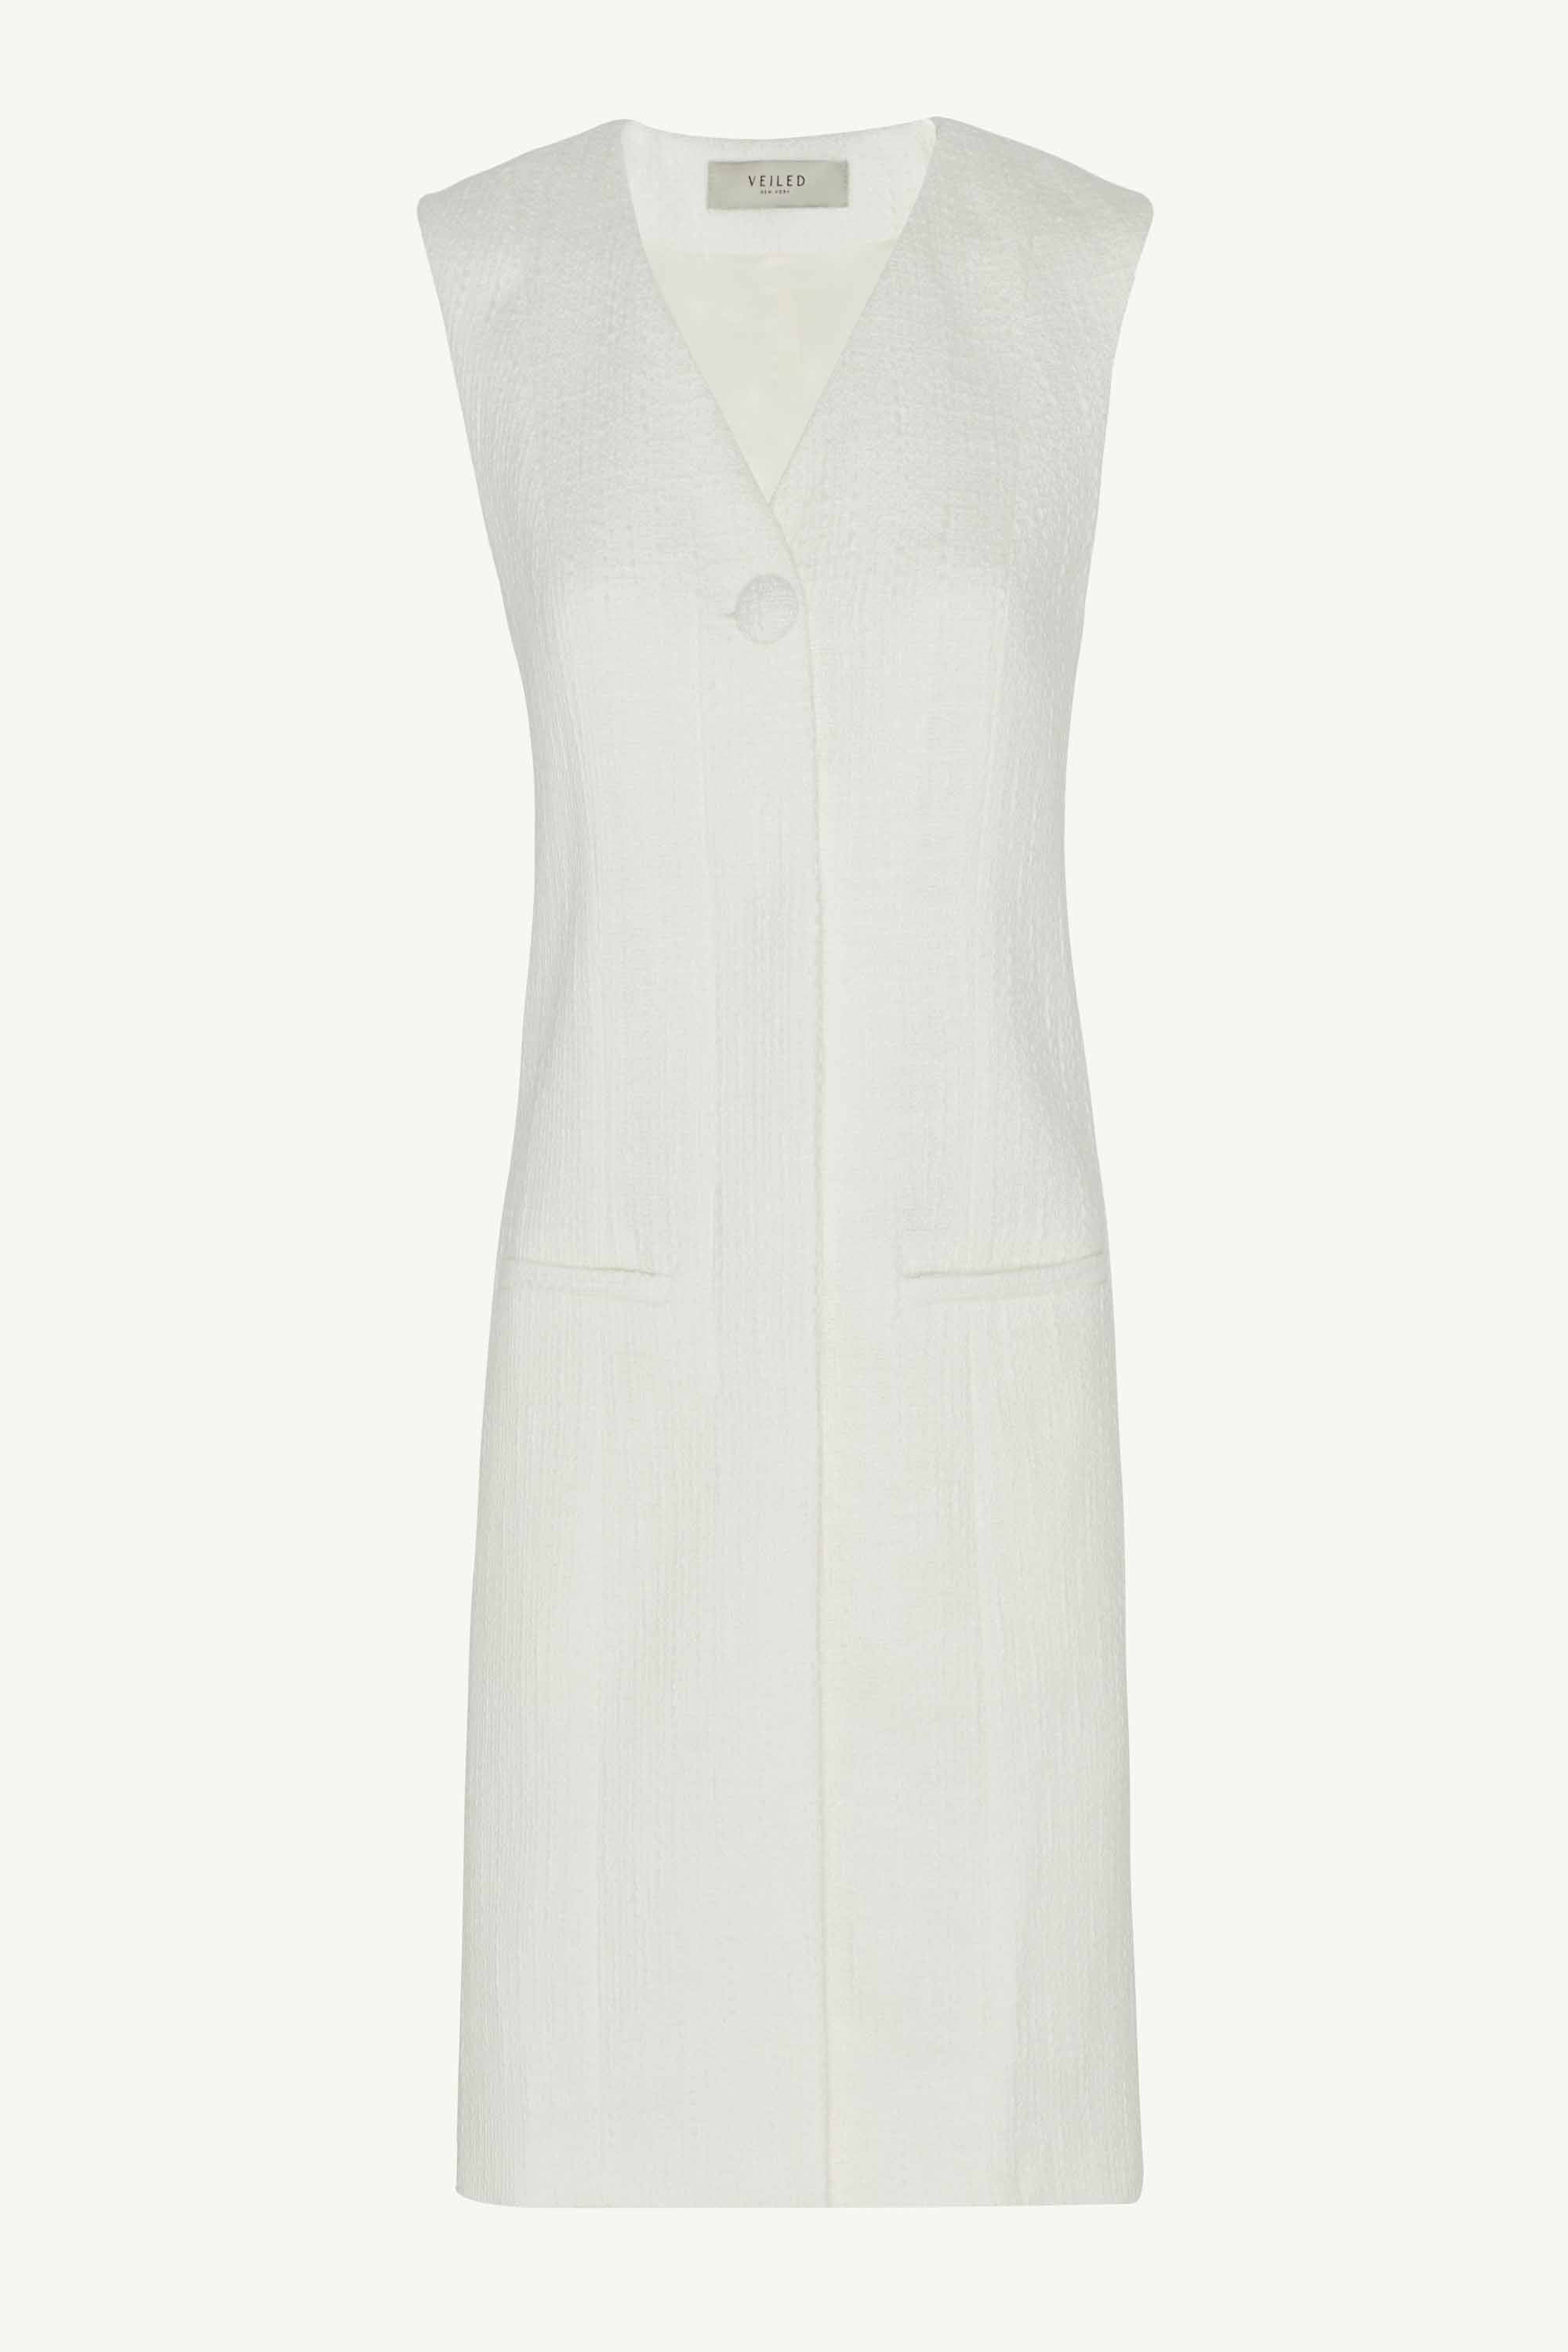 Marcella Tweed Vest - Pearl Clothing Veiled 